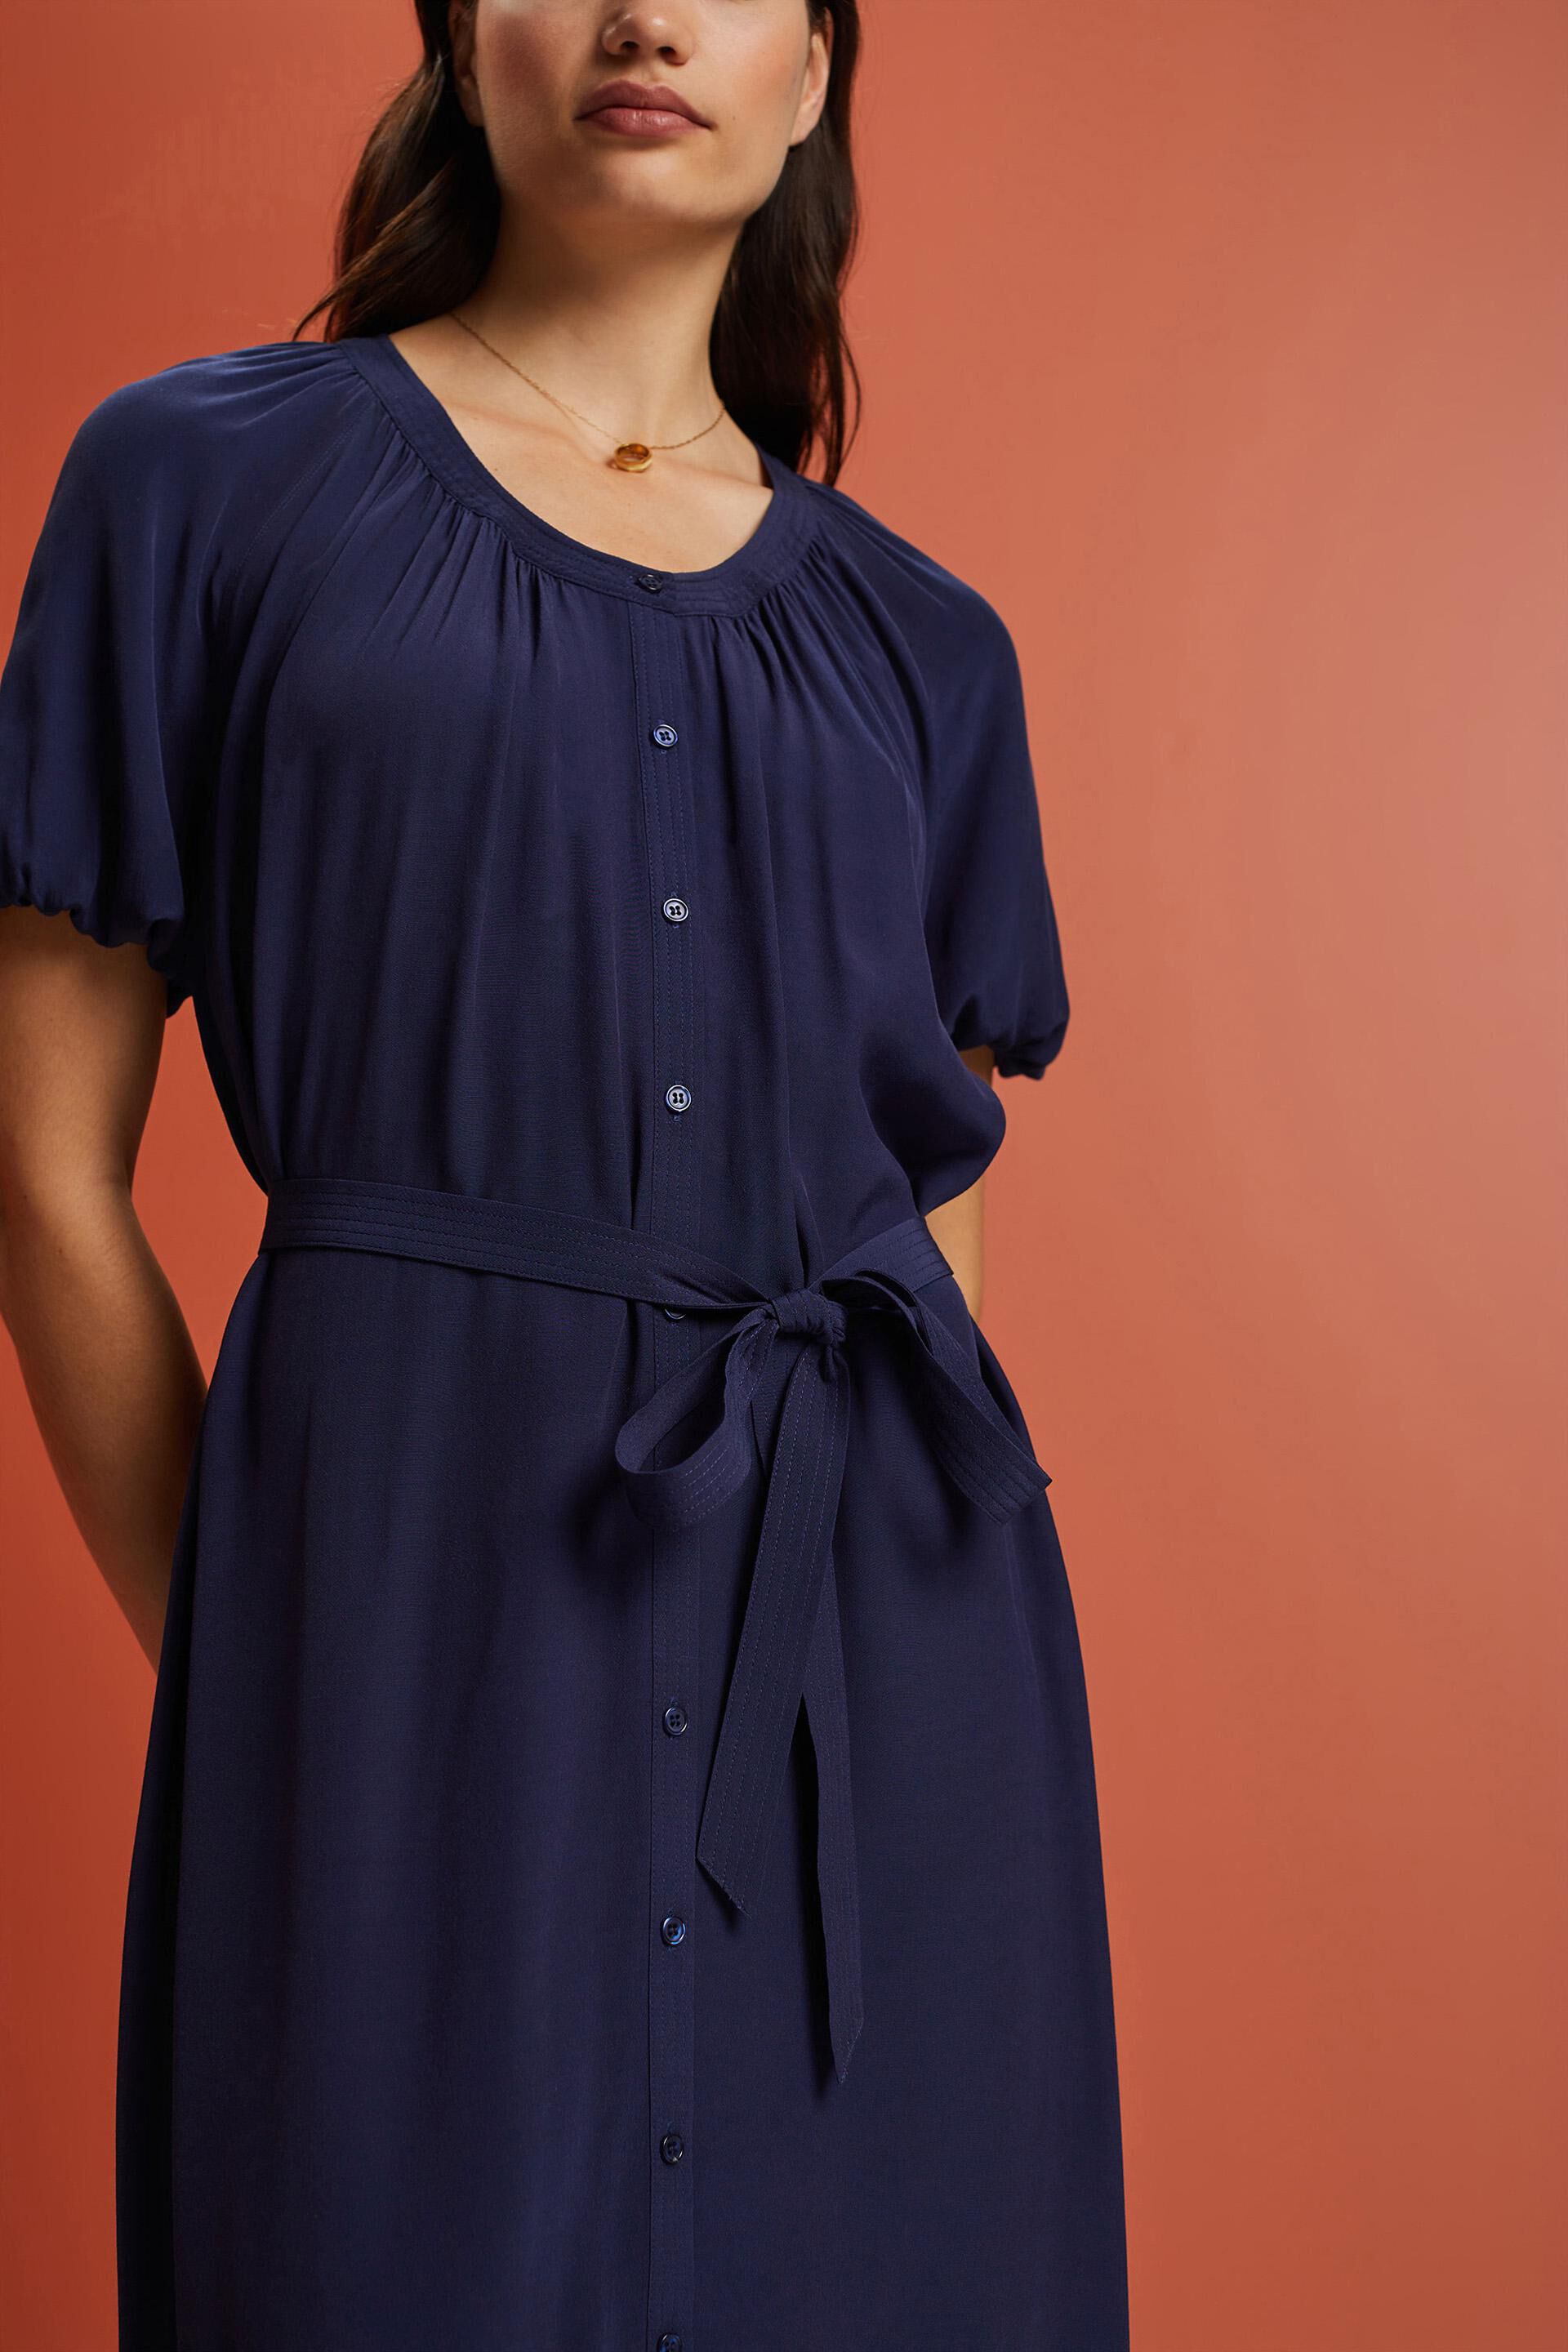 ESPRIT - Feminine shirt dress at our online shop